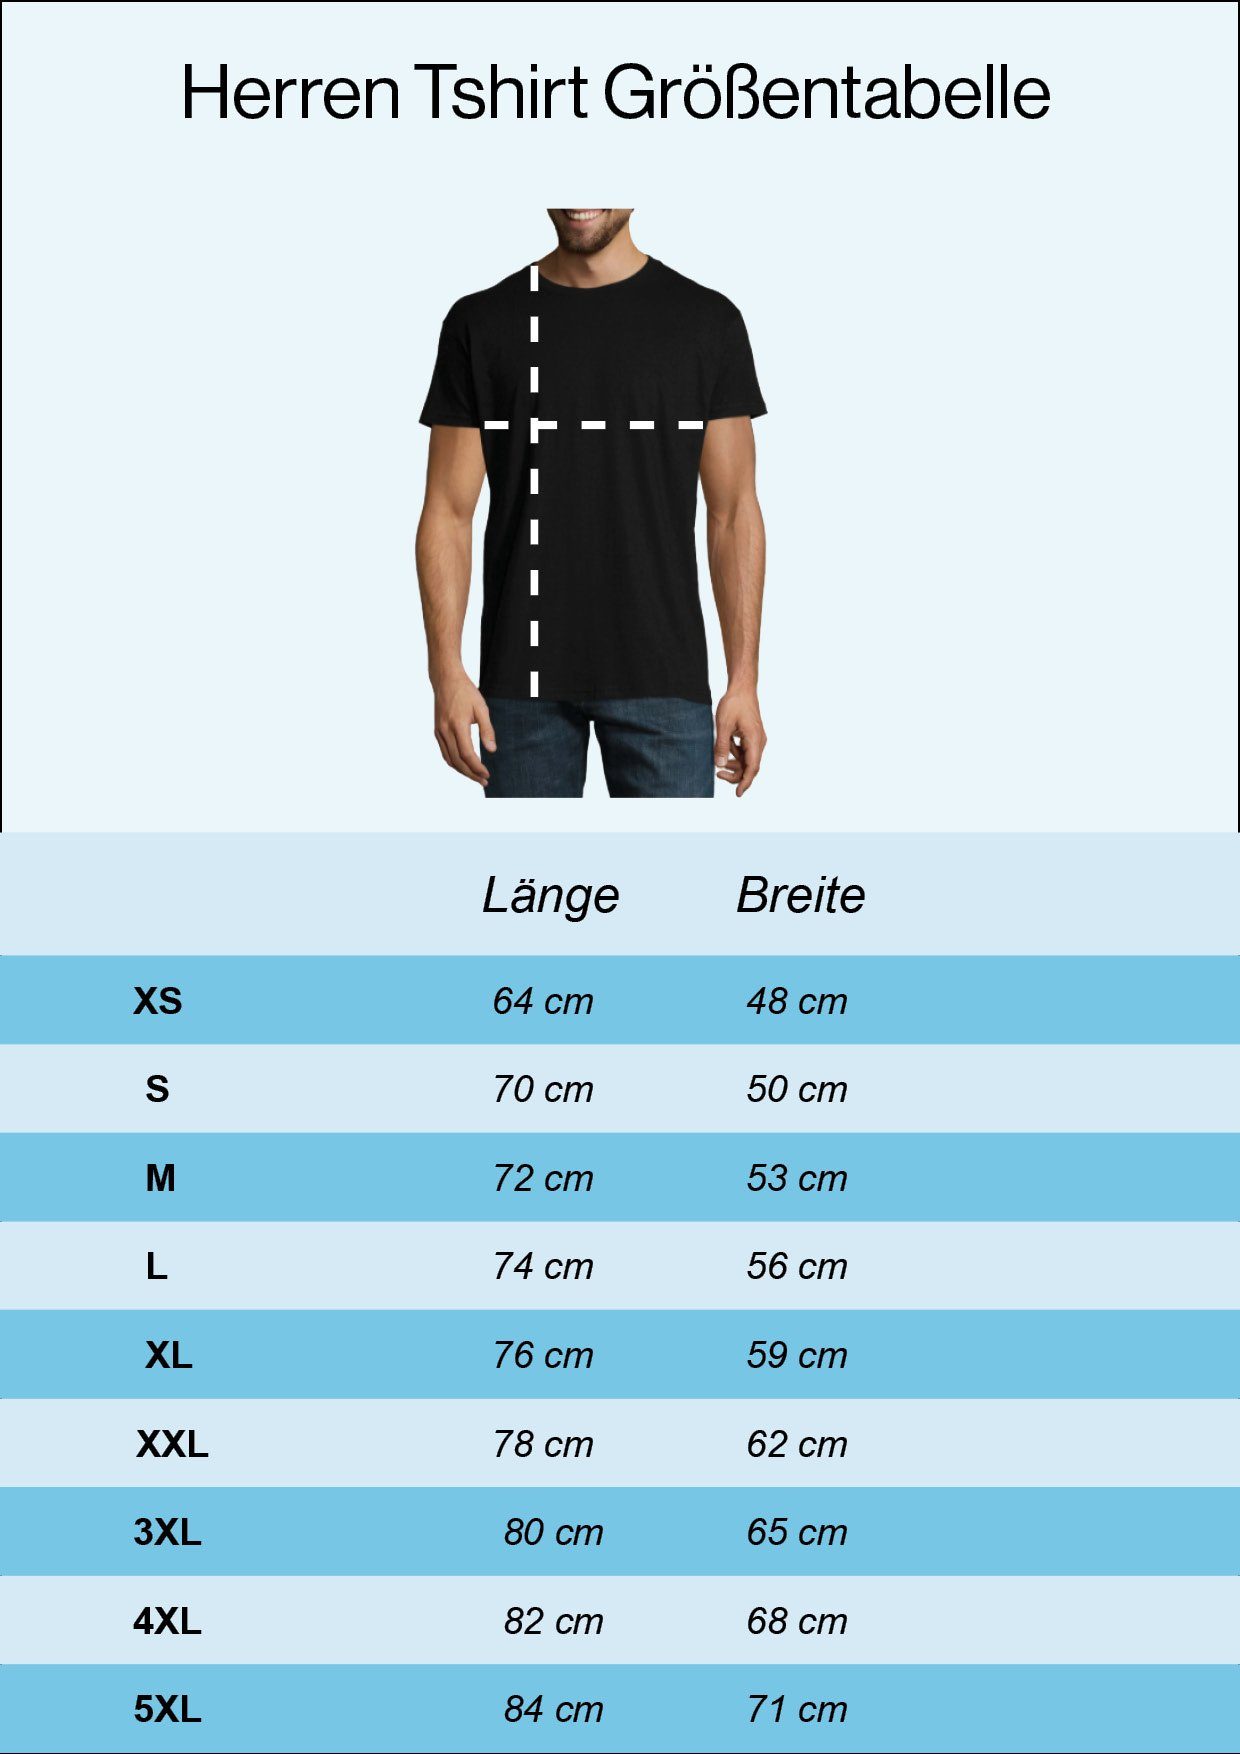 Youth Designz T-Shirt Shirt mit Herren Bro trendigem Chill Frontprint Navyblau Faultier